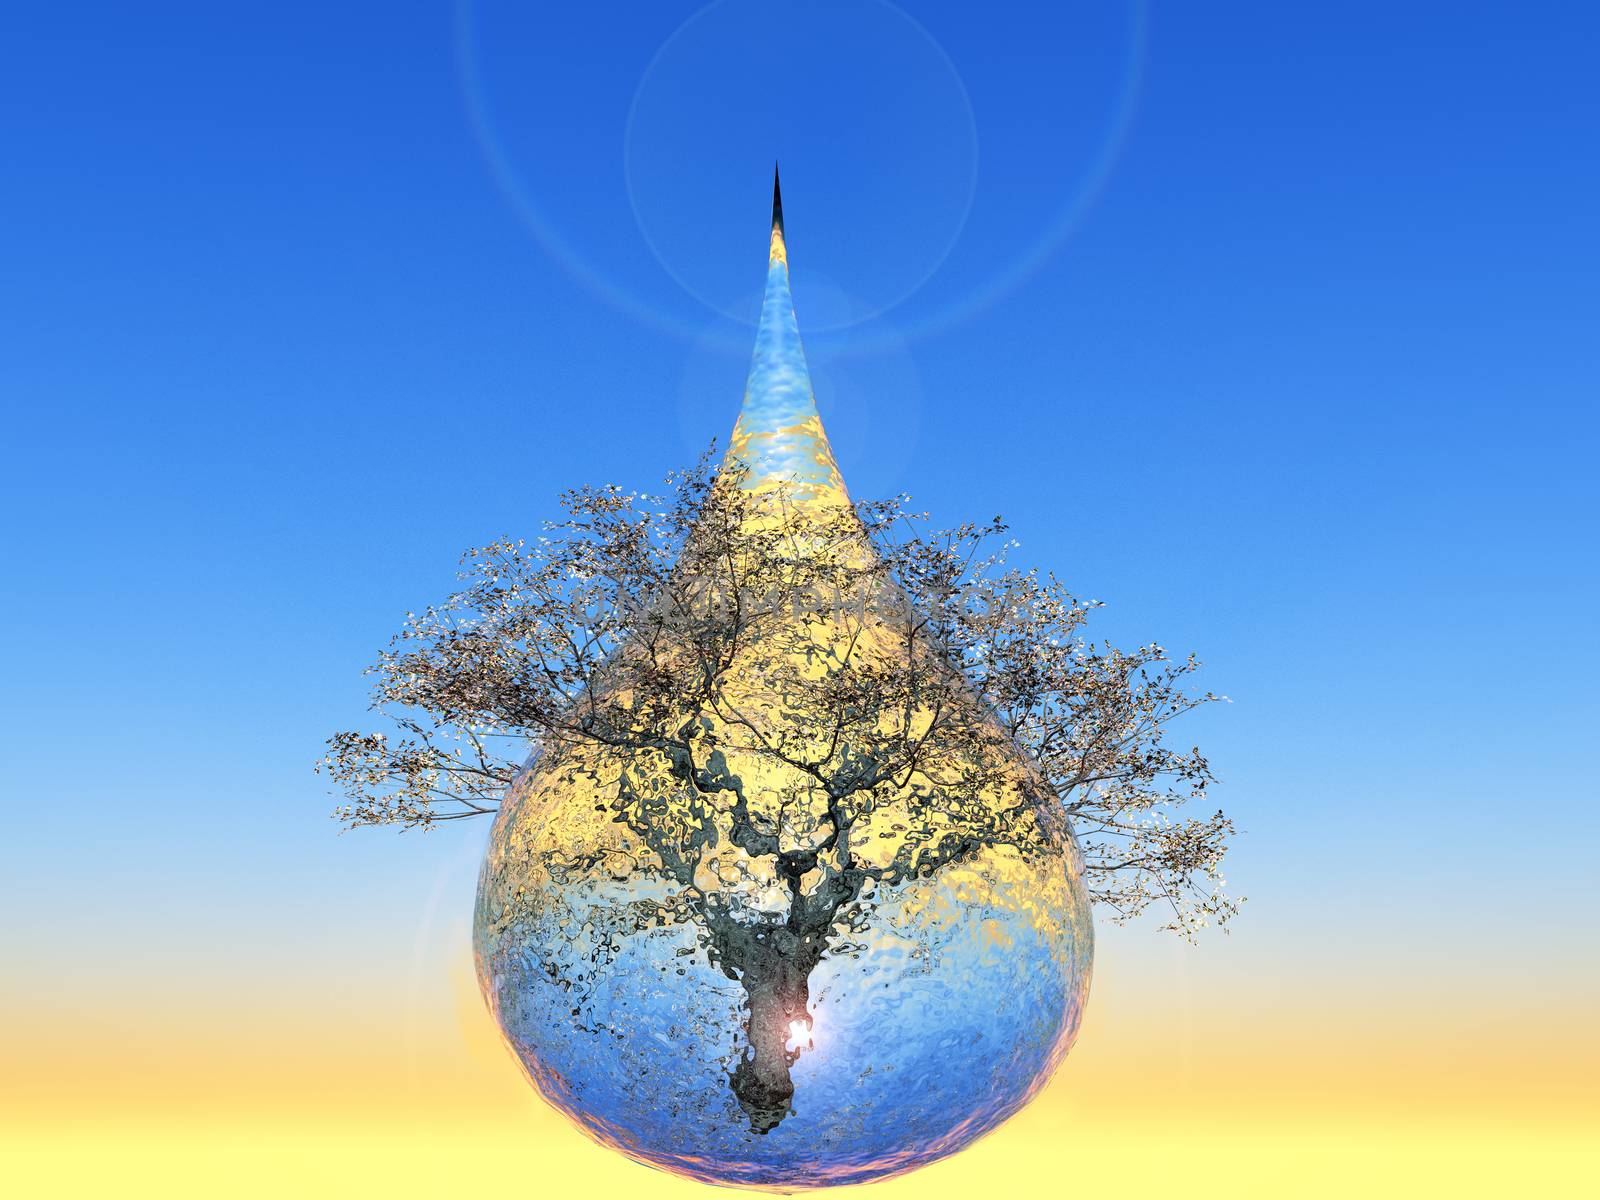 bio sphere by gufoto